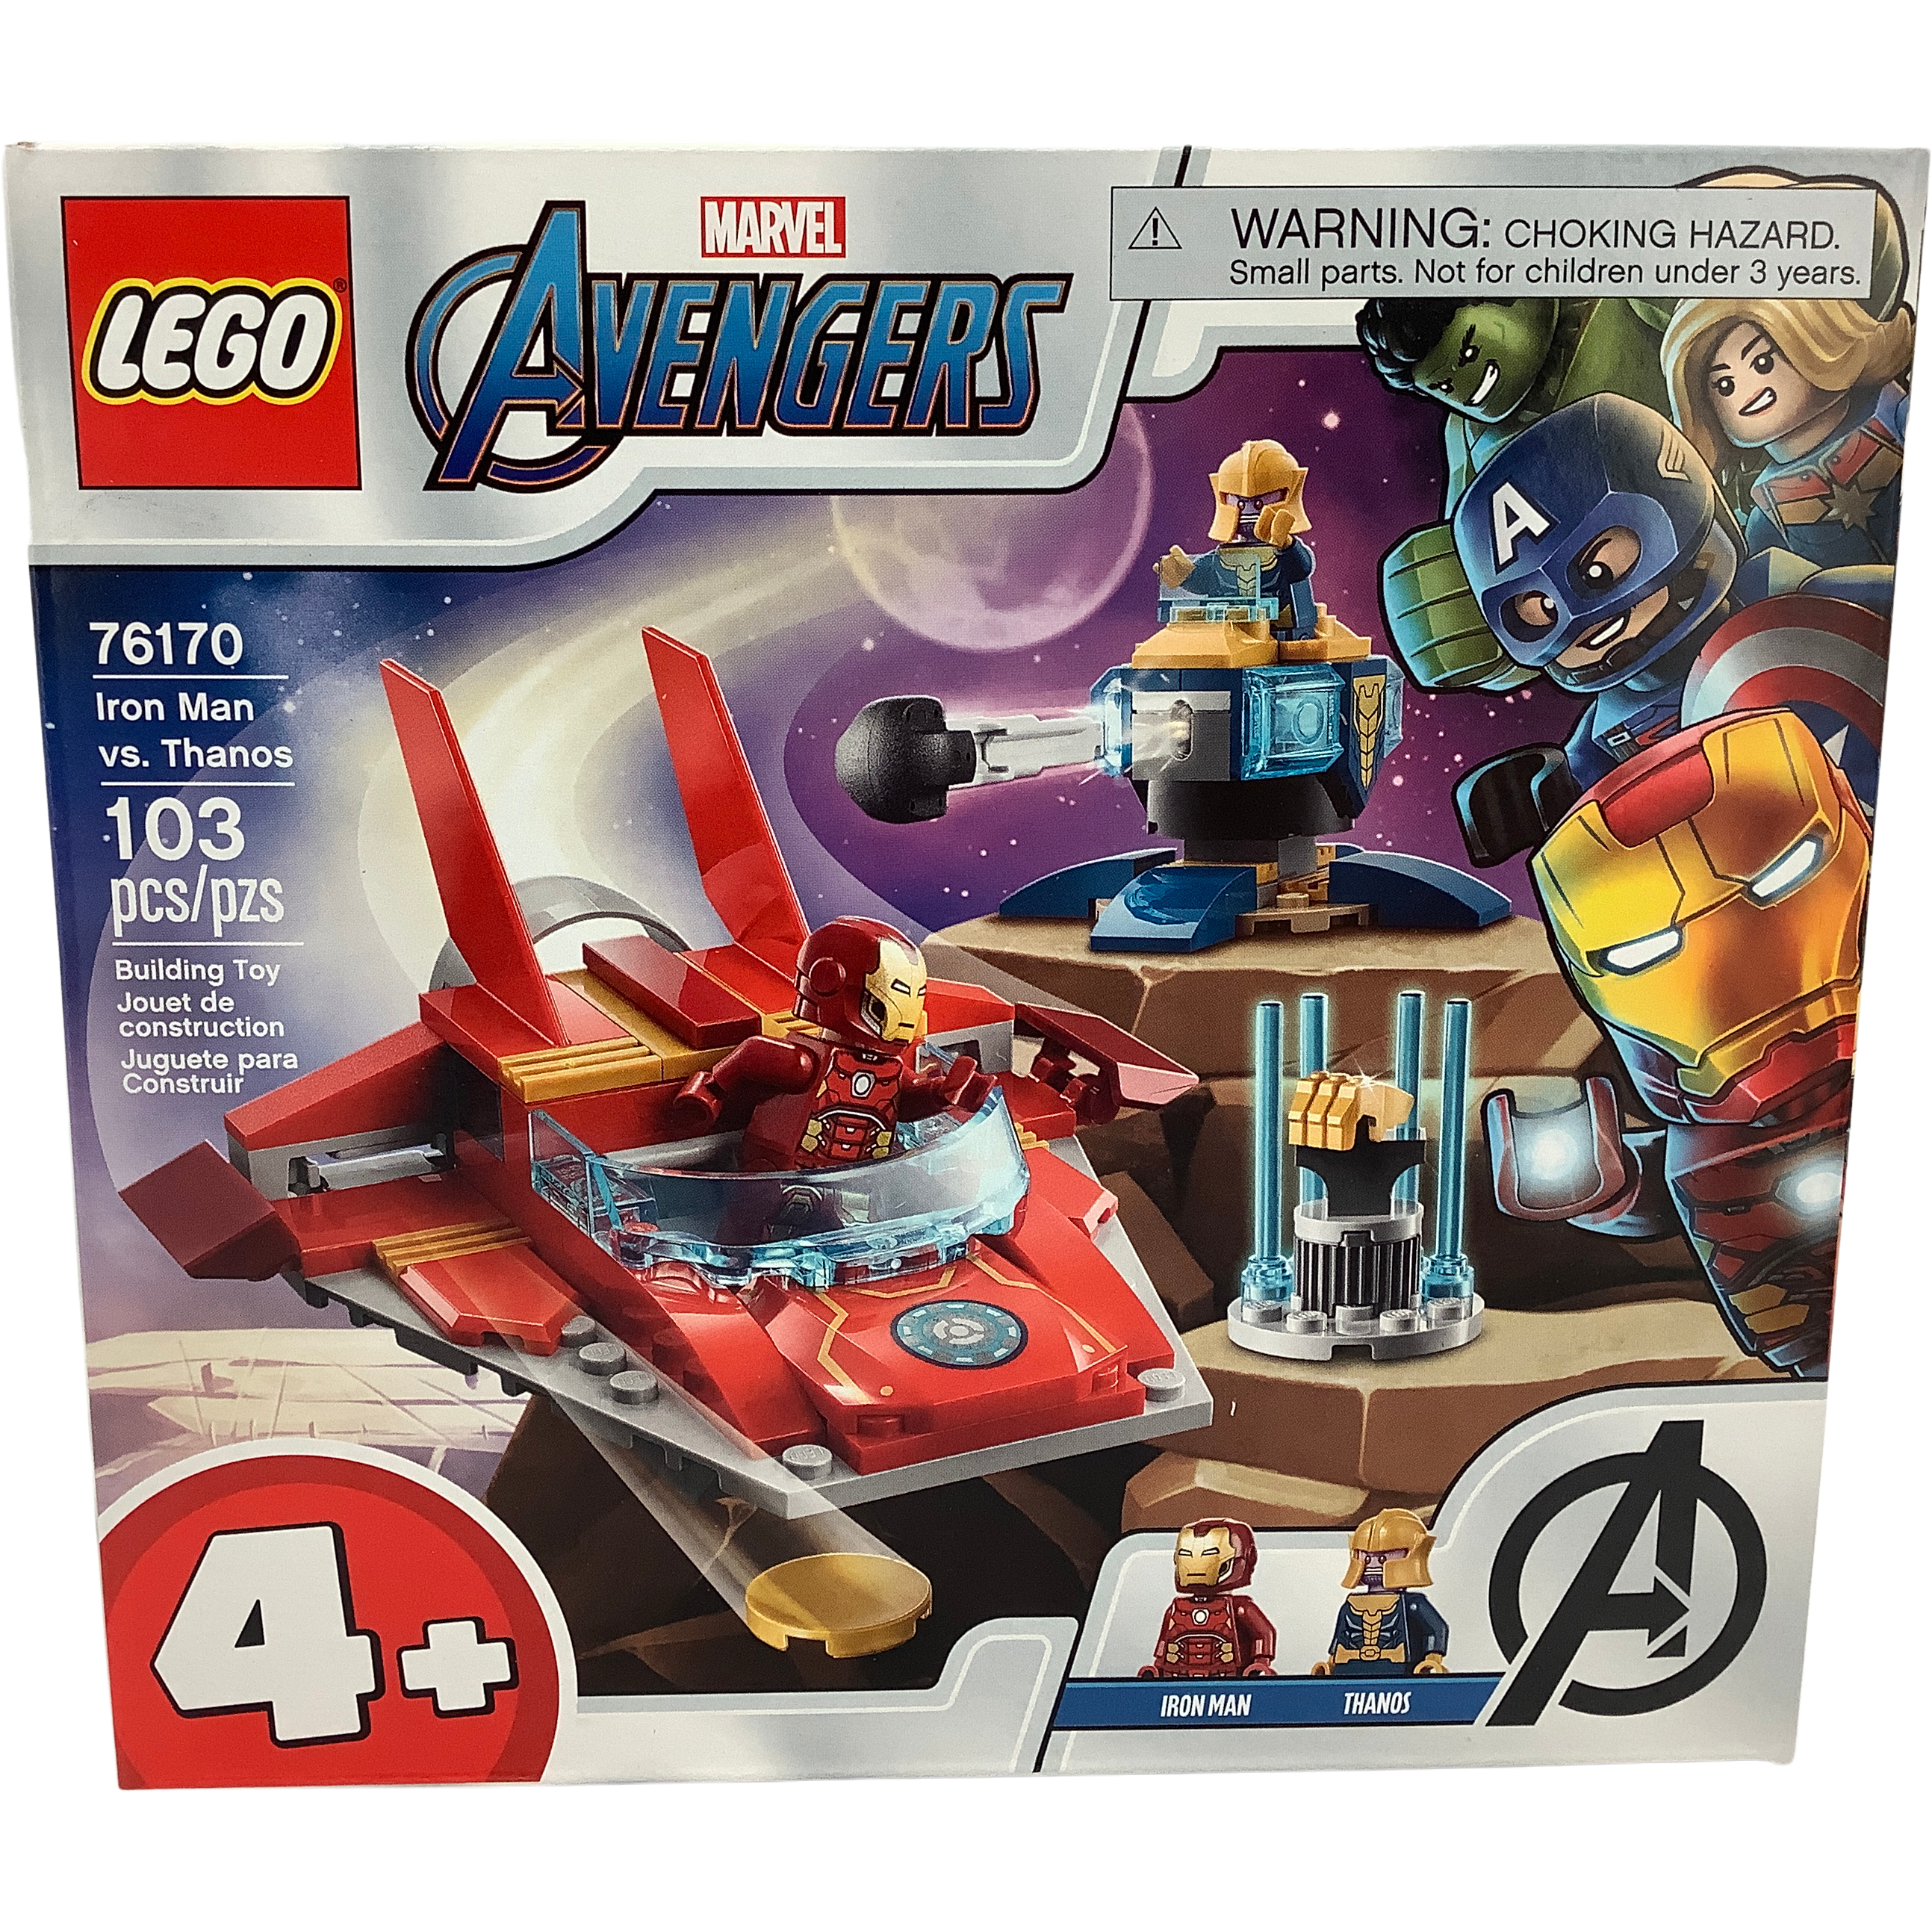 Lego Marvel Avengers Building Set / Iron Man vs Thanos / 76170 / 103 Pieces / Action Toy **DEALS**